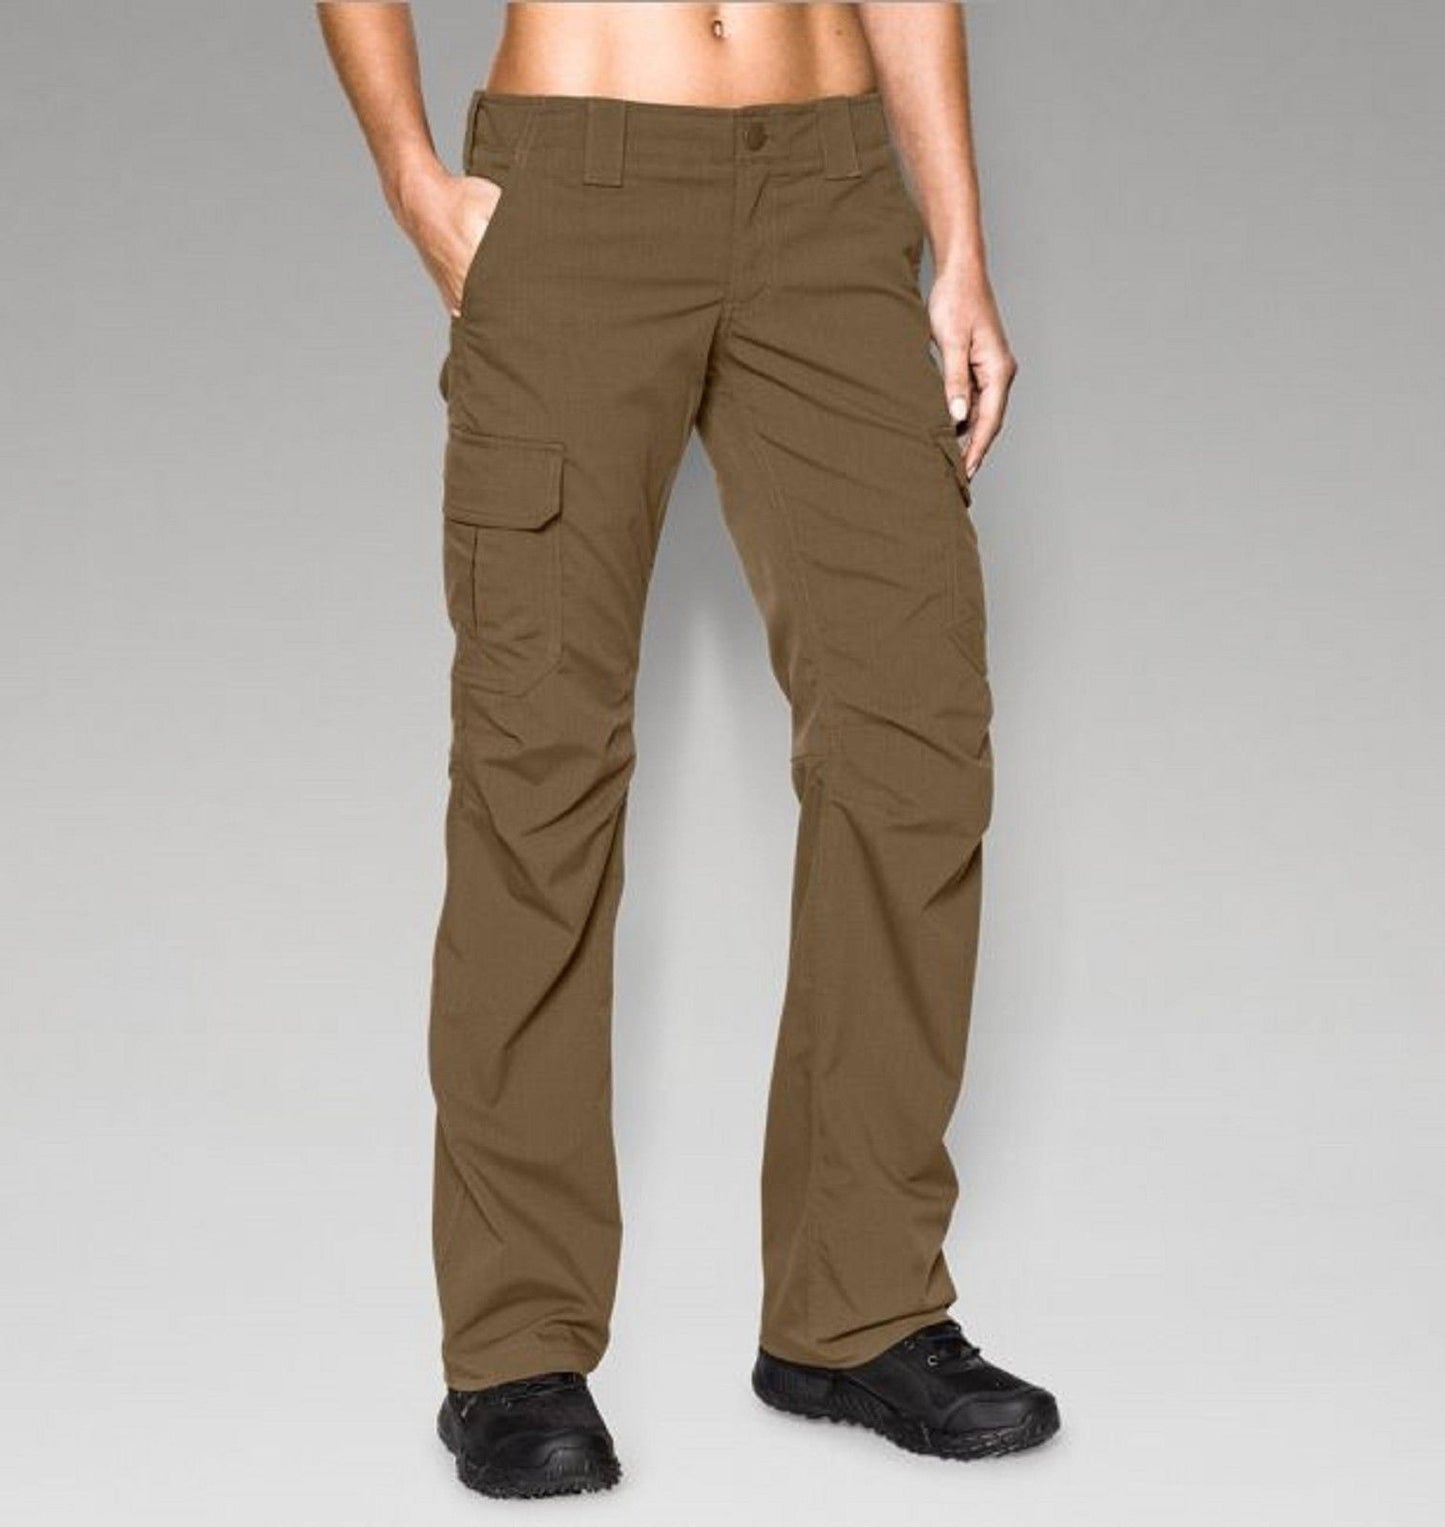 Under Armour Women's UA Tactical Patrol Pant - 1254097